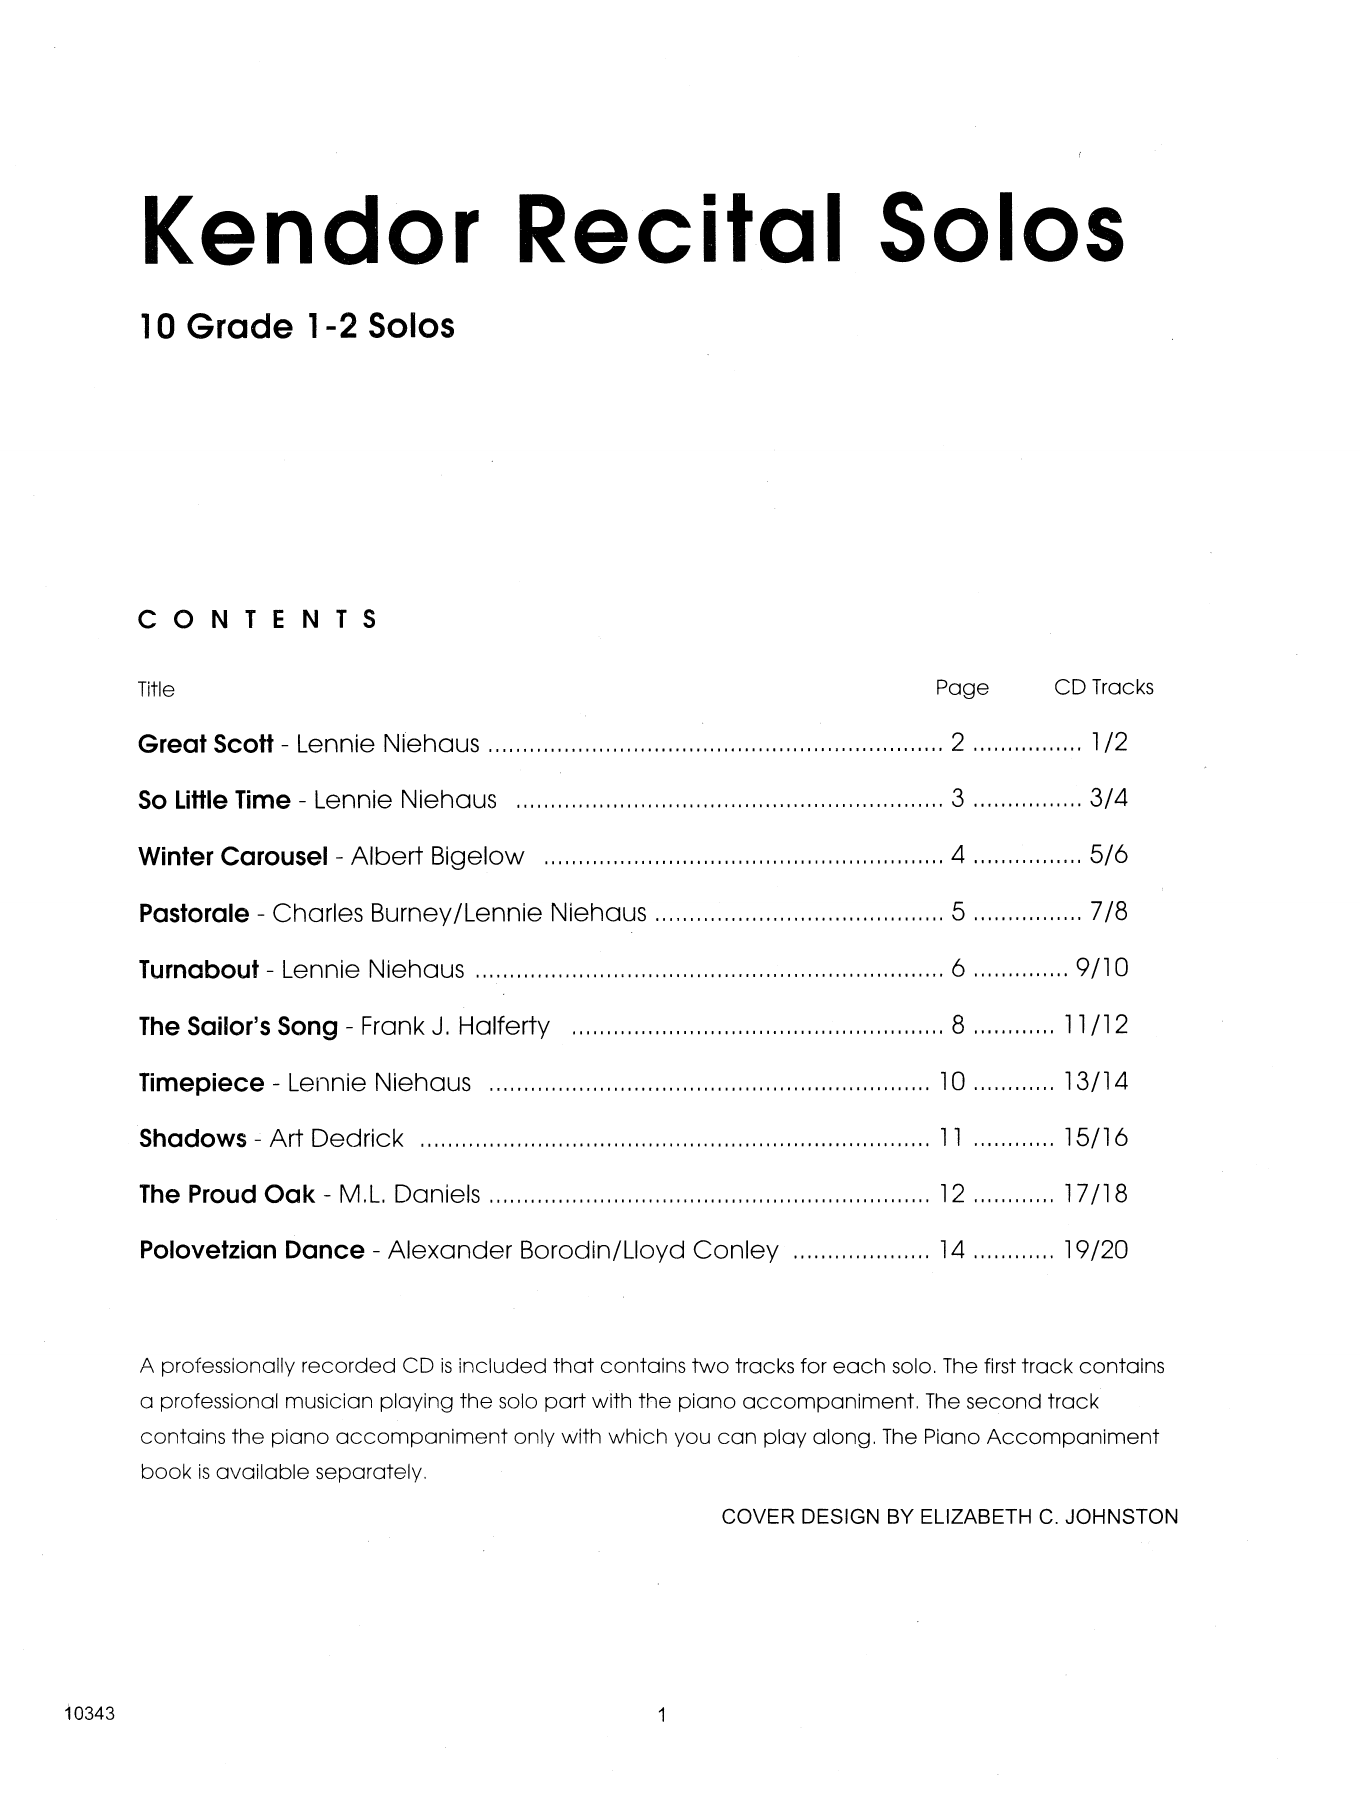 Download Various Kendor Recital Solos - Trombone - Solo Sheet Music